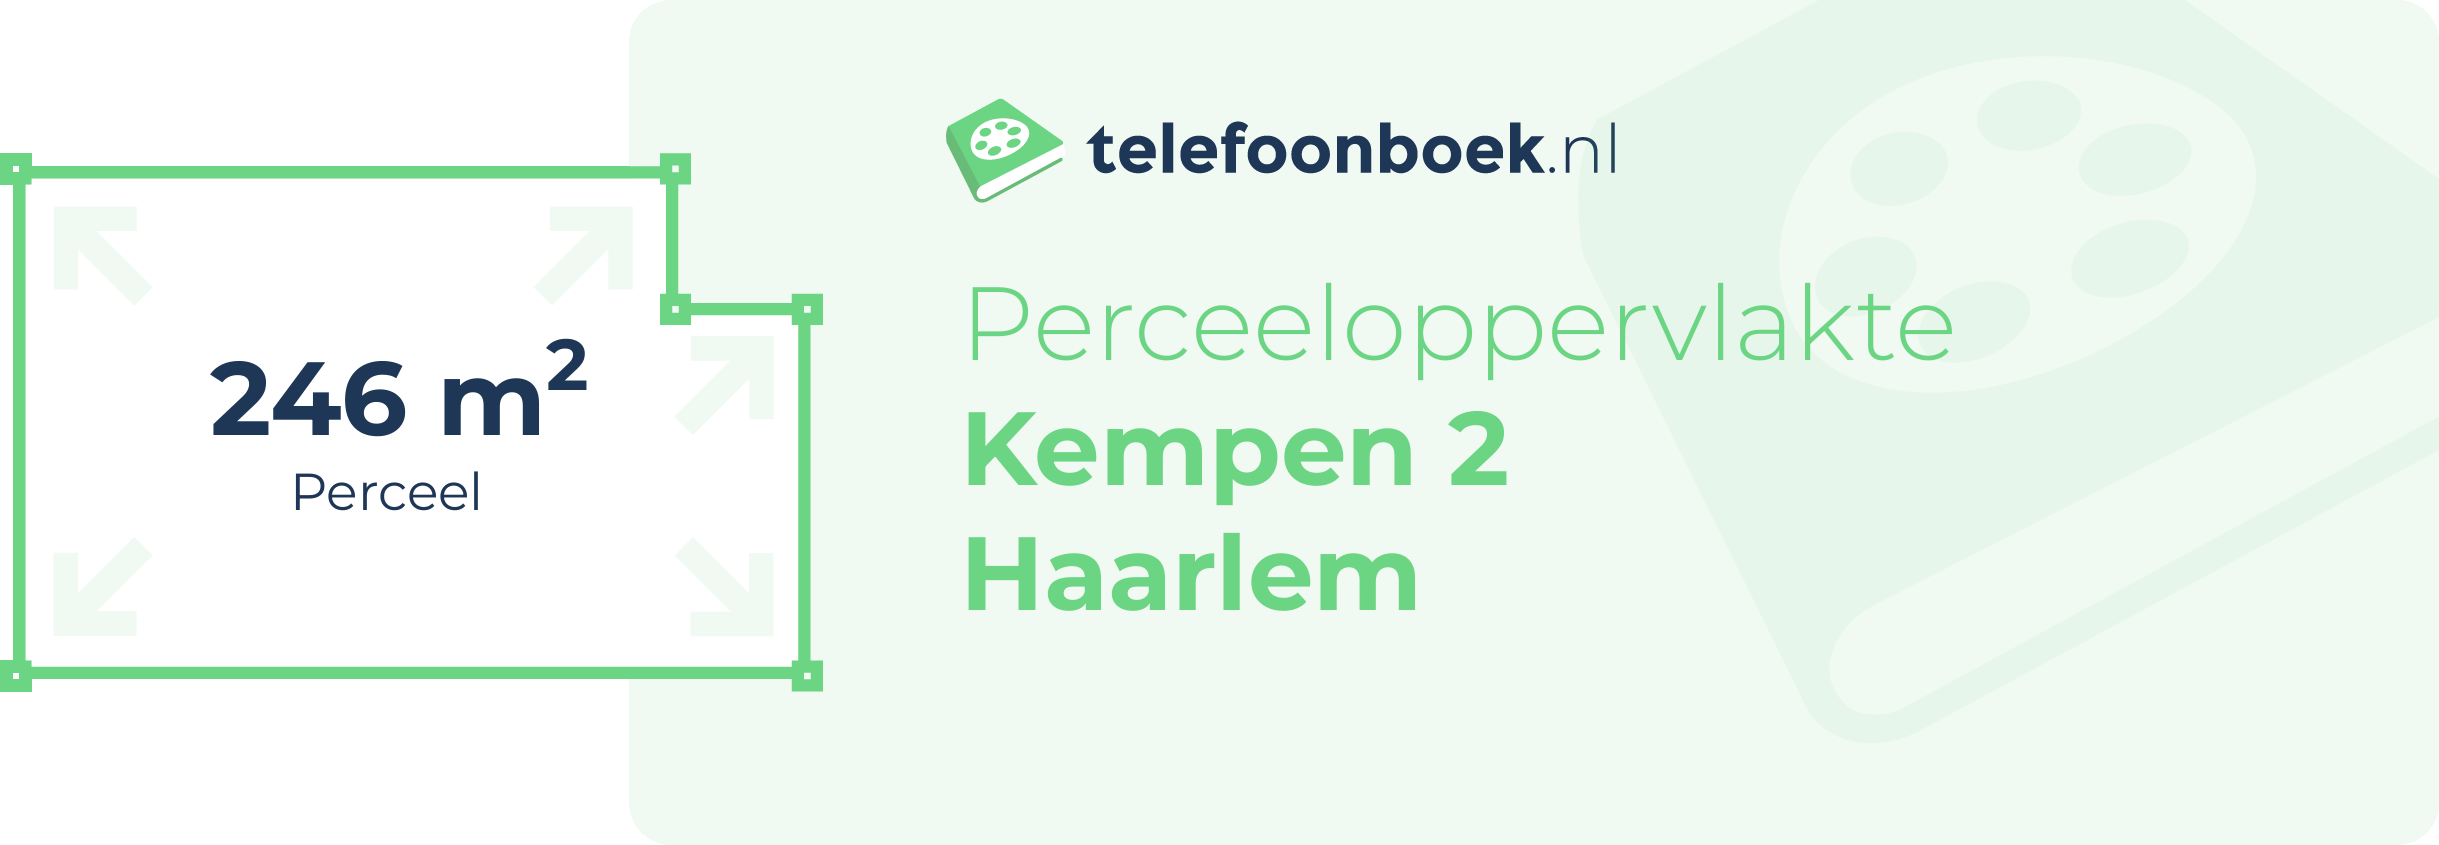 Perceeloppervlakte Kempen 2 Haarlem